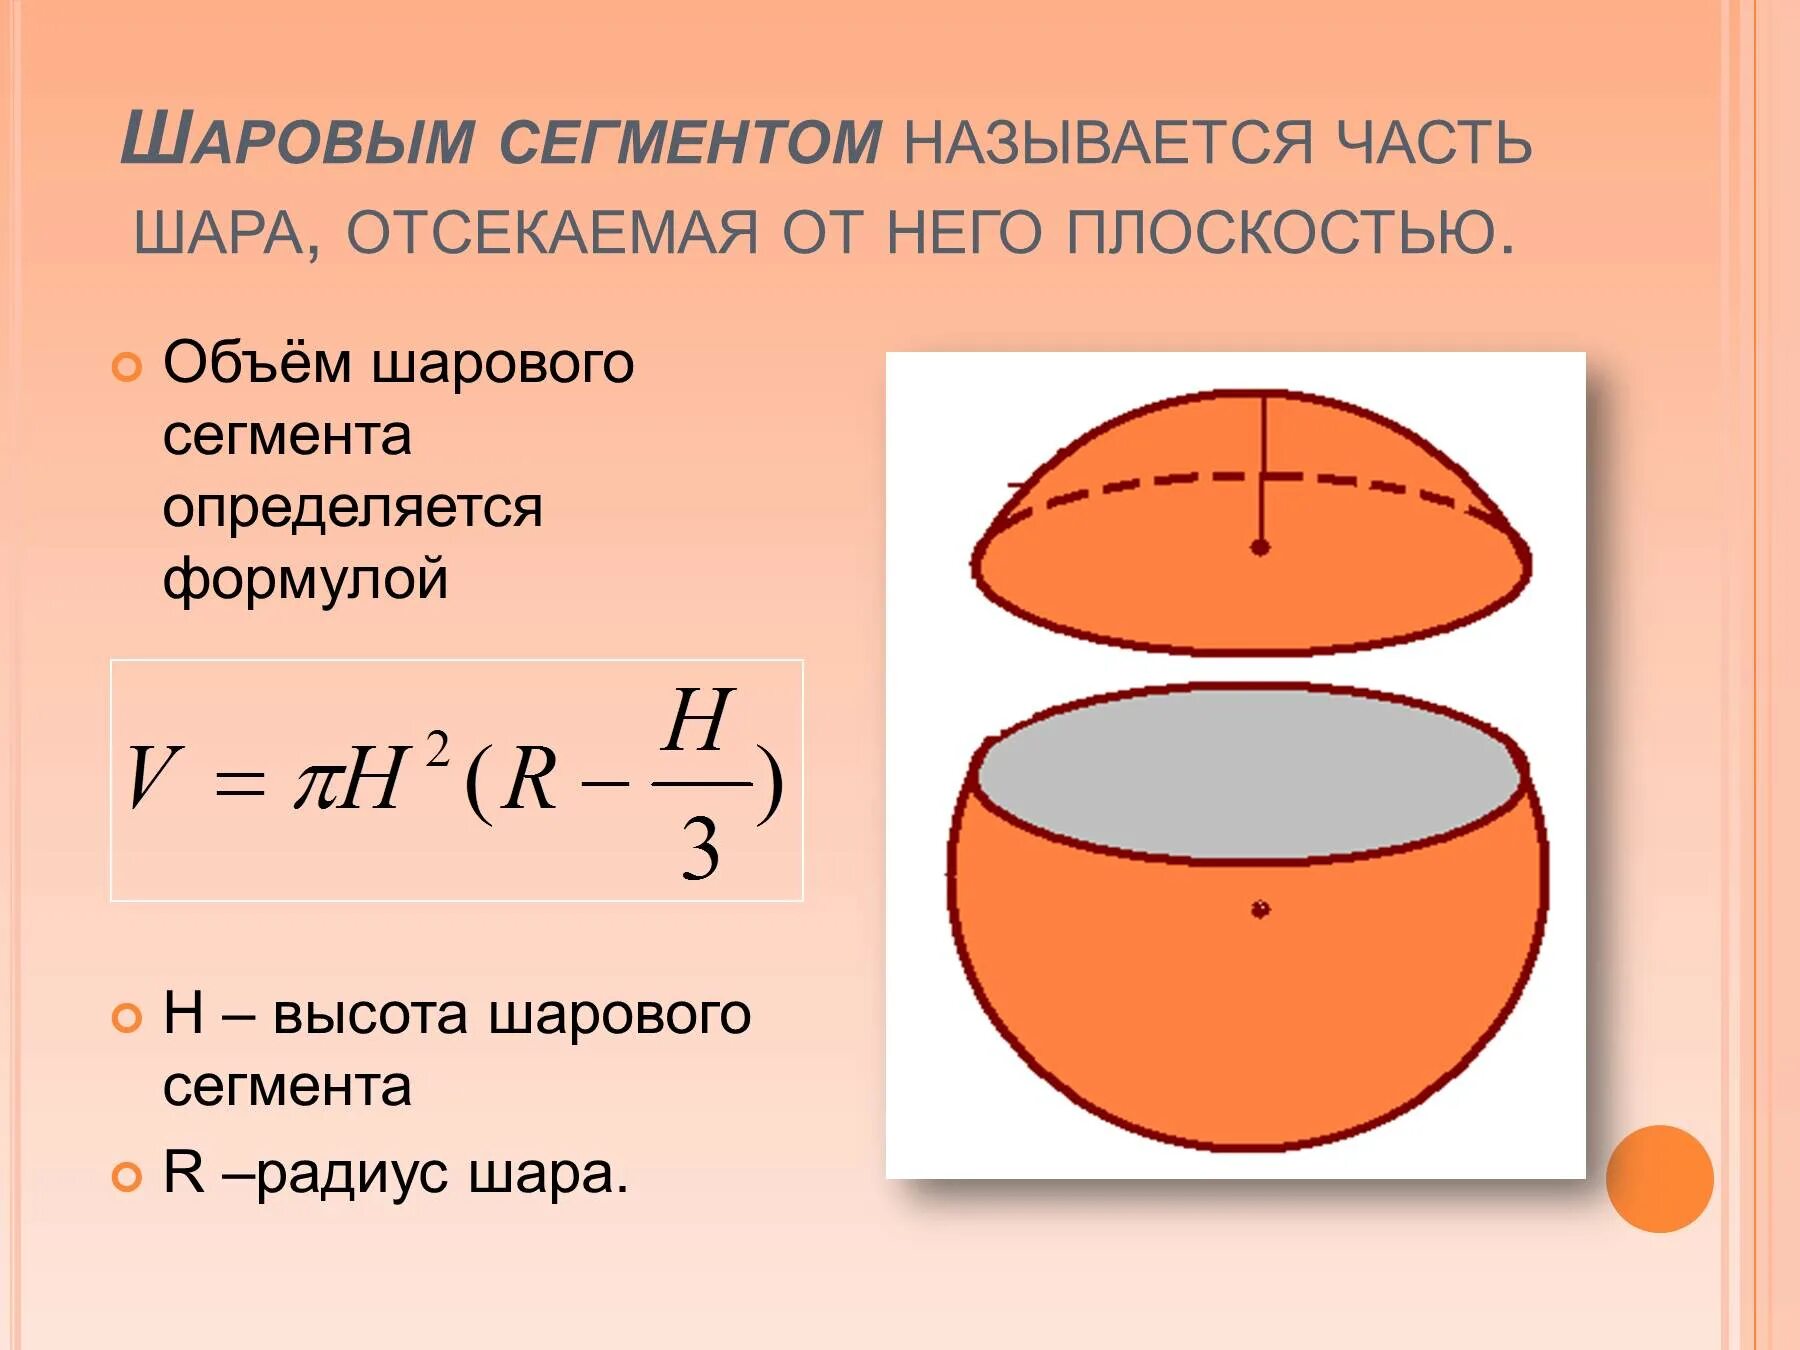 Формула объема части шара. Объём сегмента шара формула. Объем шарового сегмента формула. Объем шара и его частей формулы.